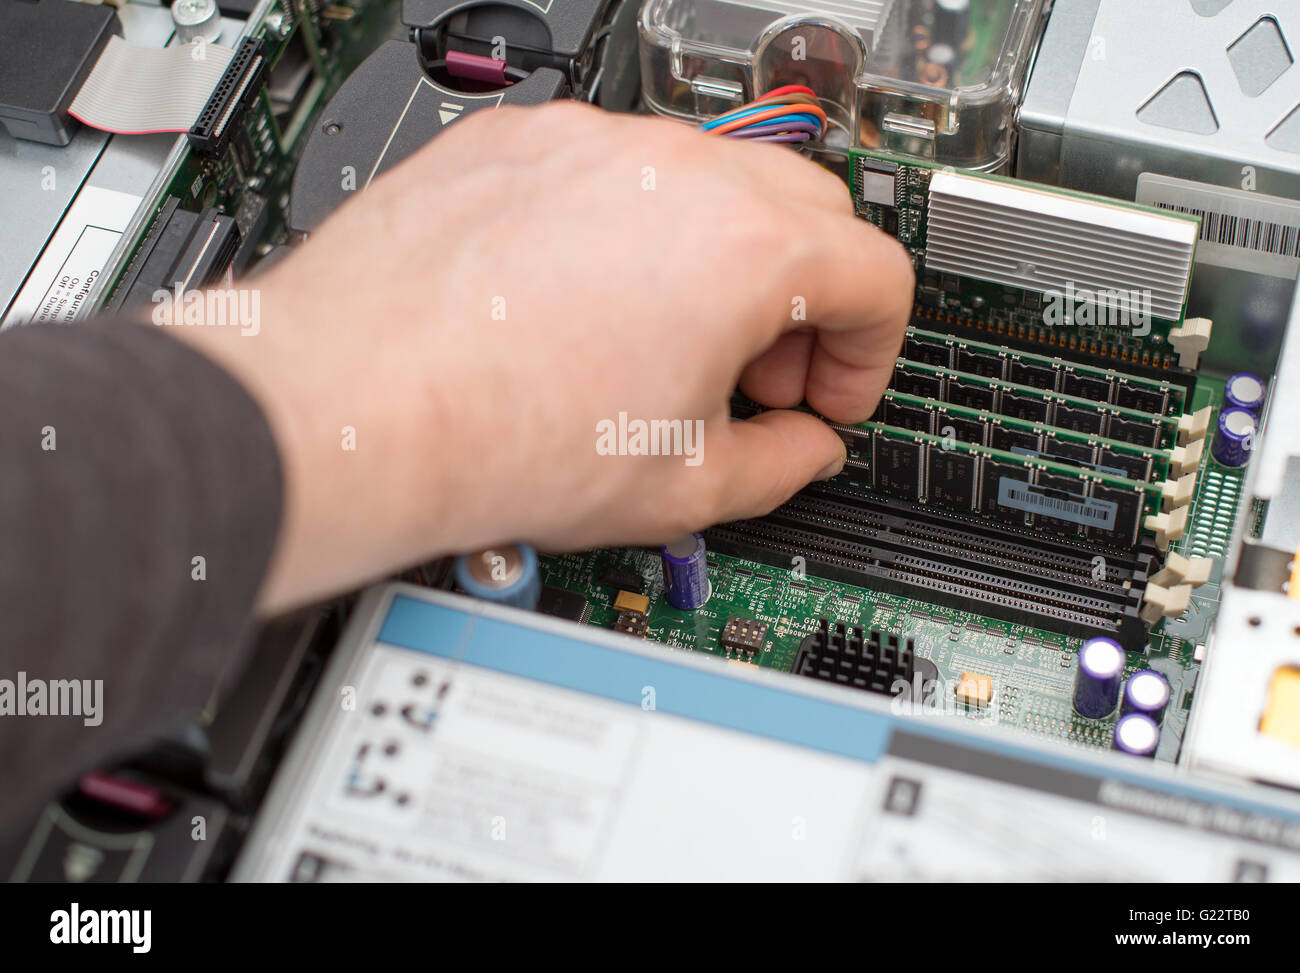 Computer technician installing RAM memory into motherboard. Stock Photo